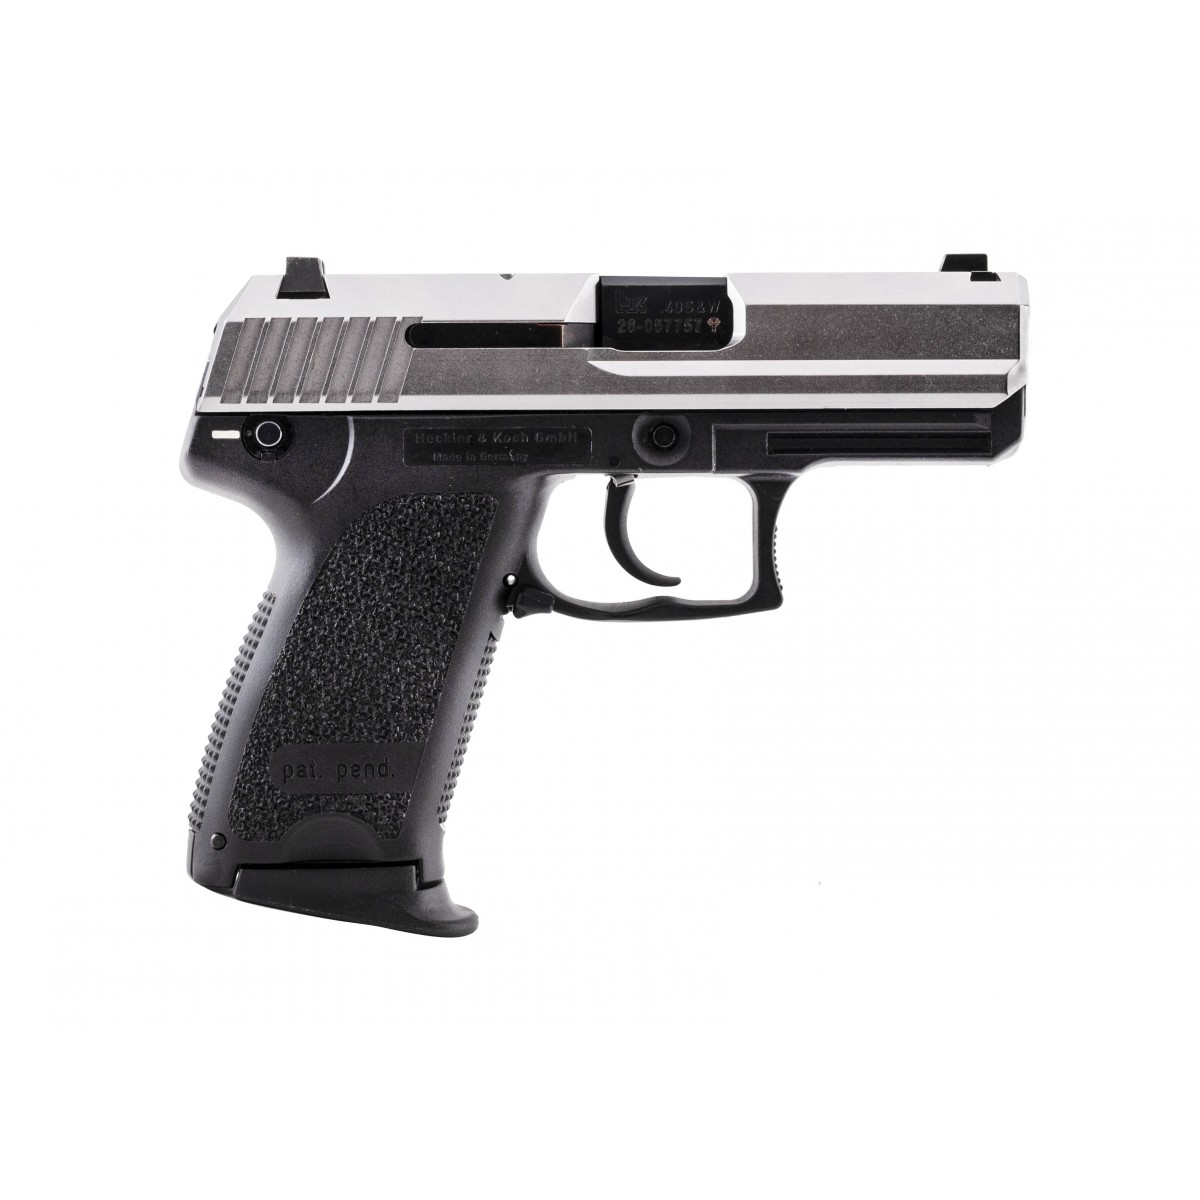 HK USP Compact .40S&W caliber pistol for sale.